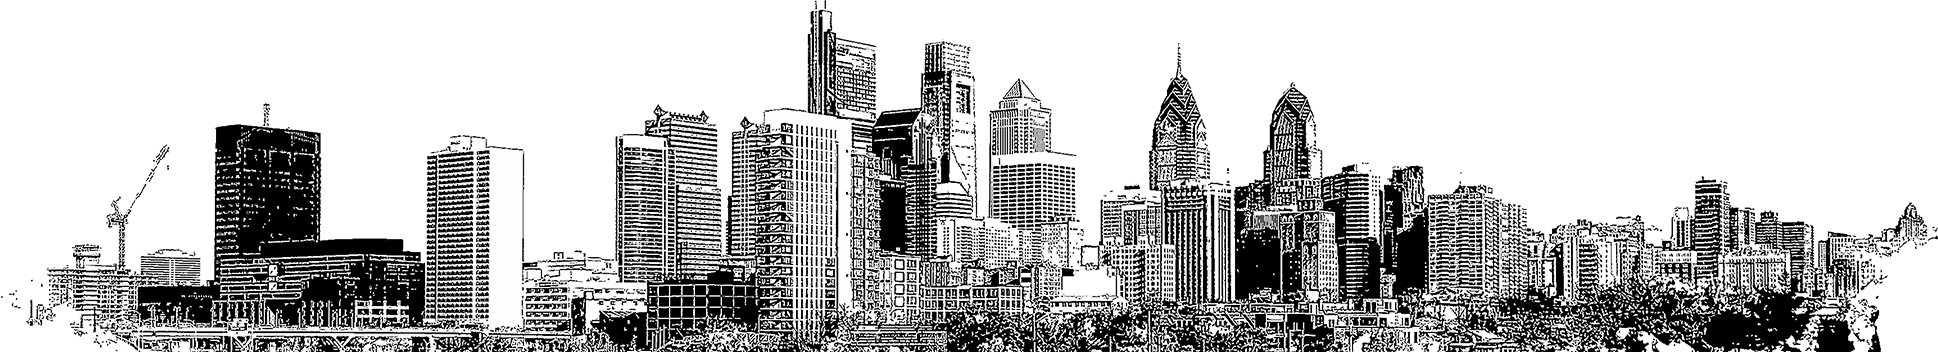 sketch of Philadelphia skyline